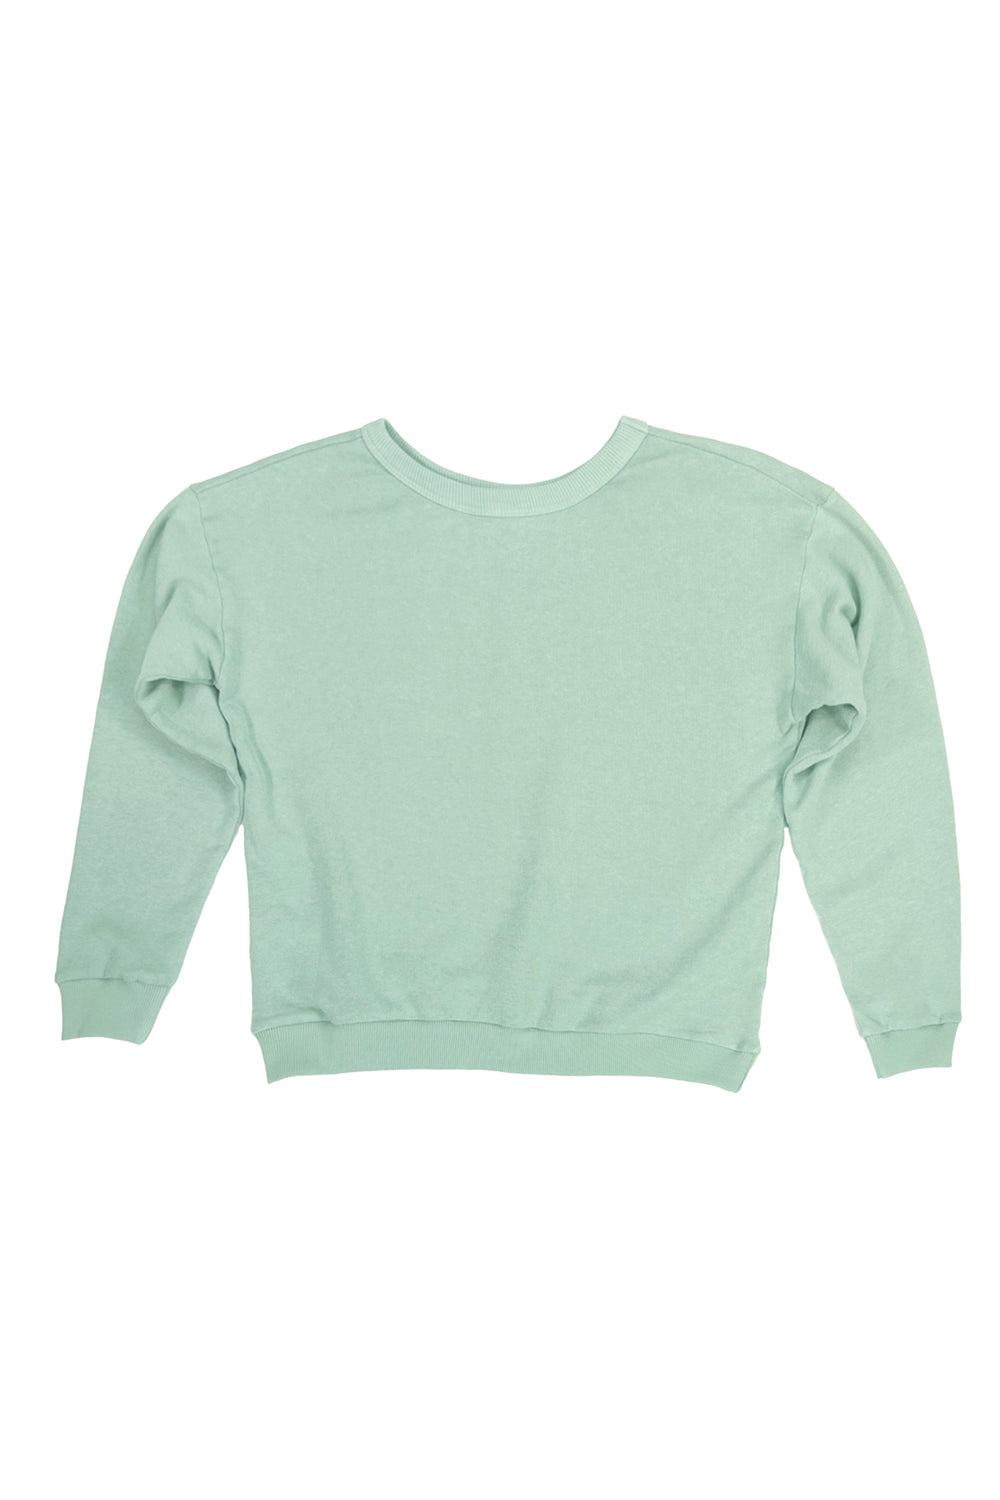 Hemp Clothing Accessories | Jungmaven & Sweatshirt Cropped Crux